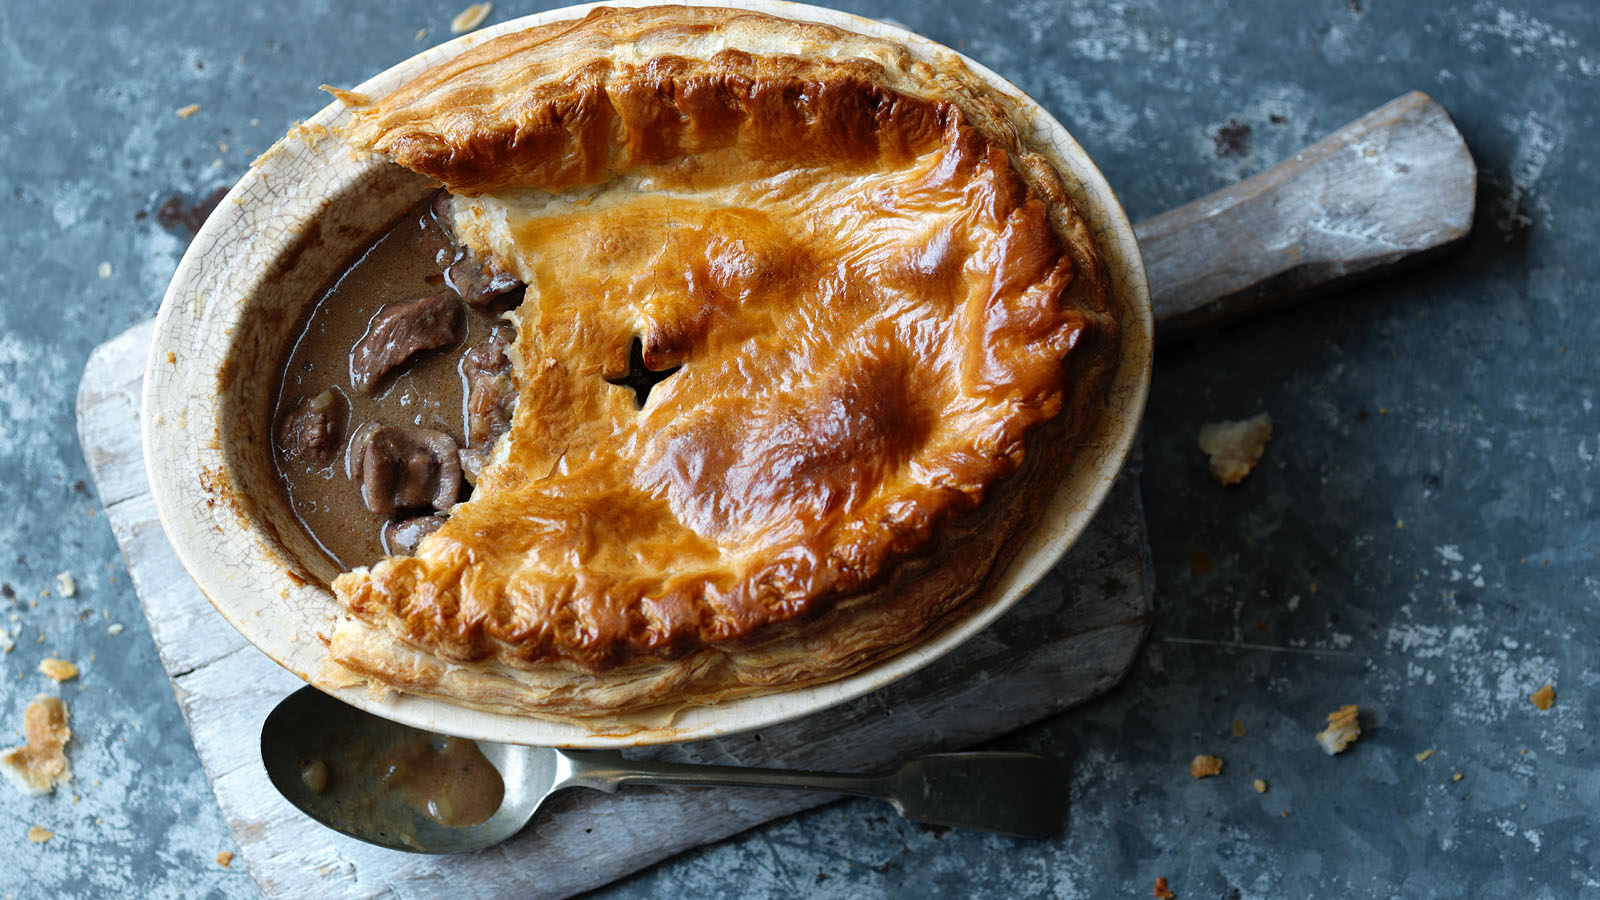 Steak and kidney pie recipe - BBC Food